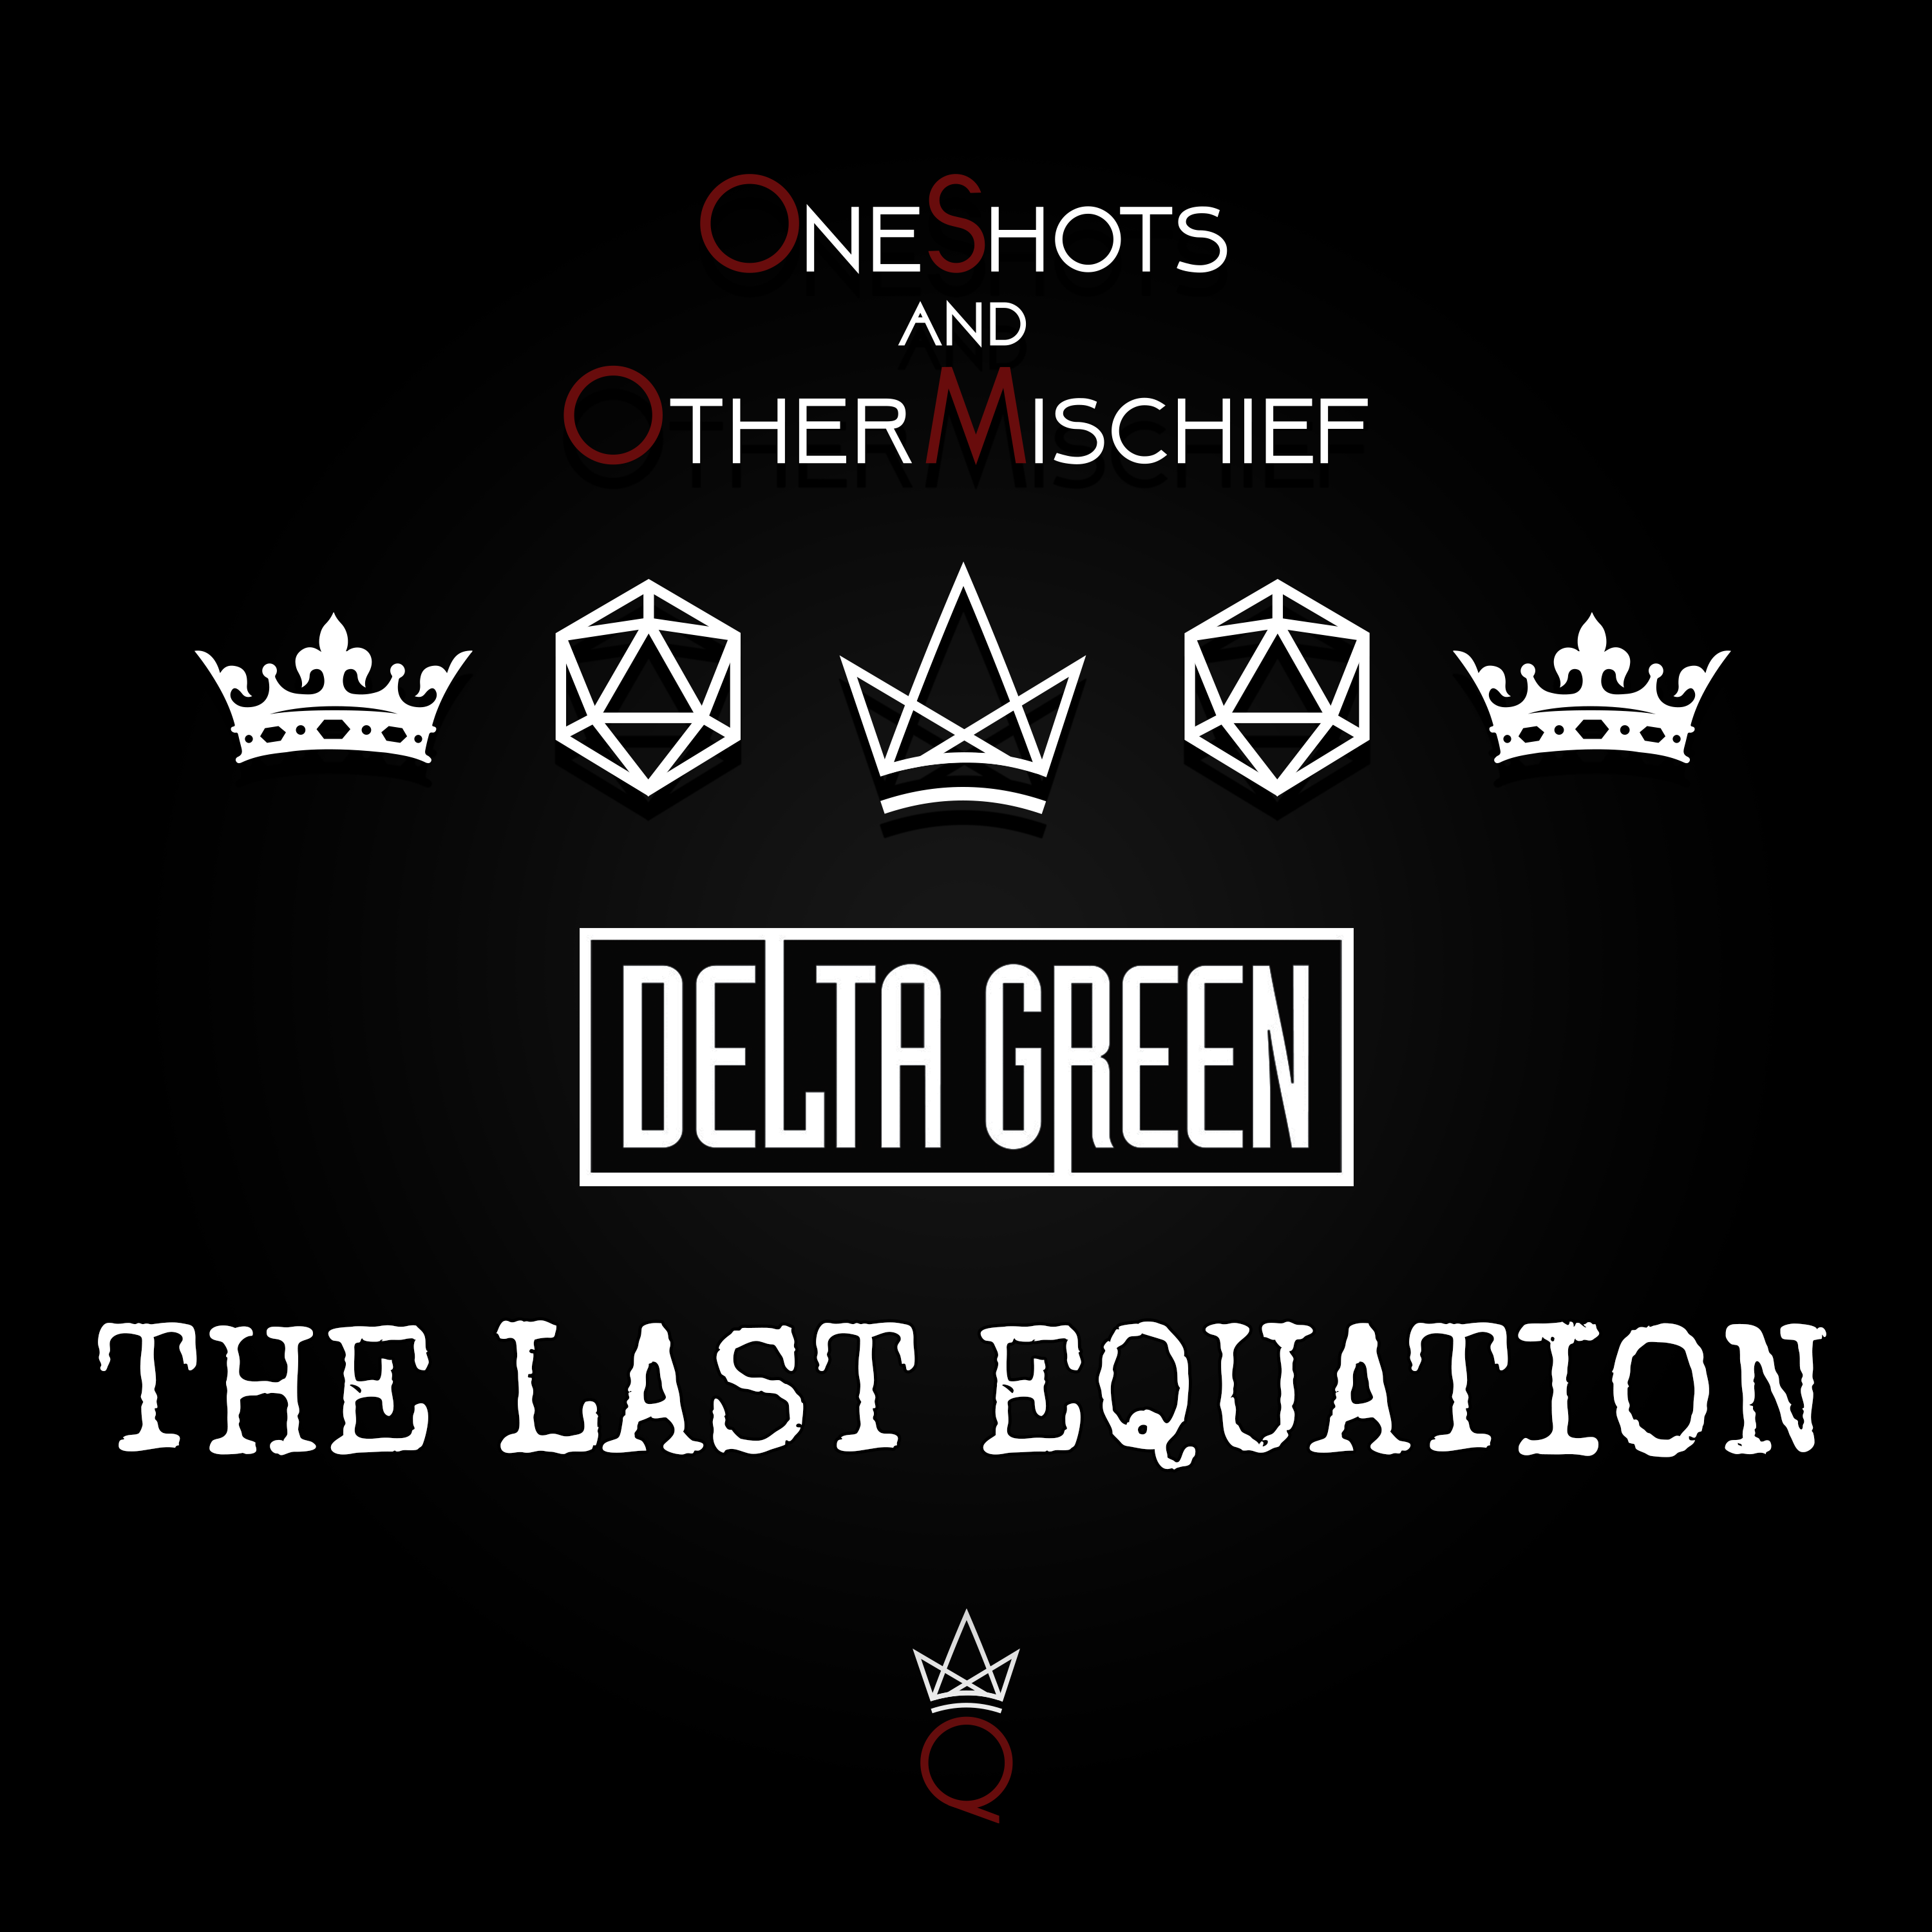 Delta Green - The Last Equation